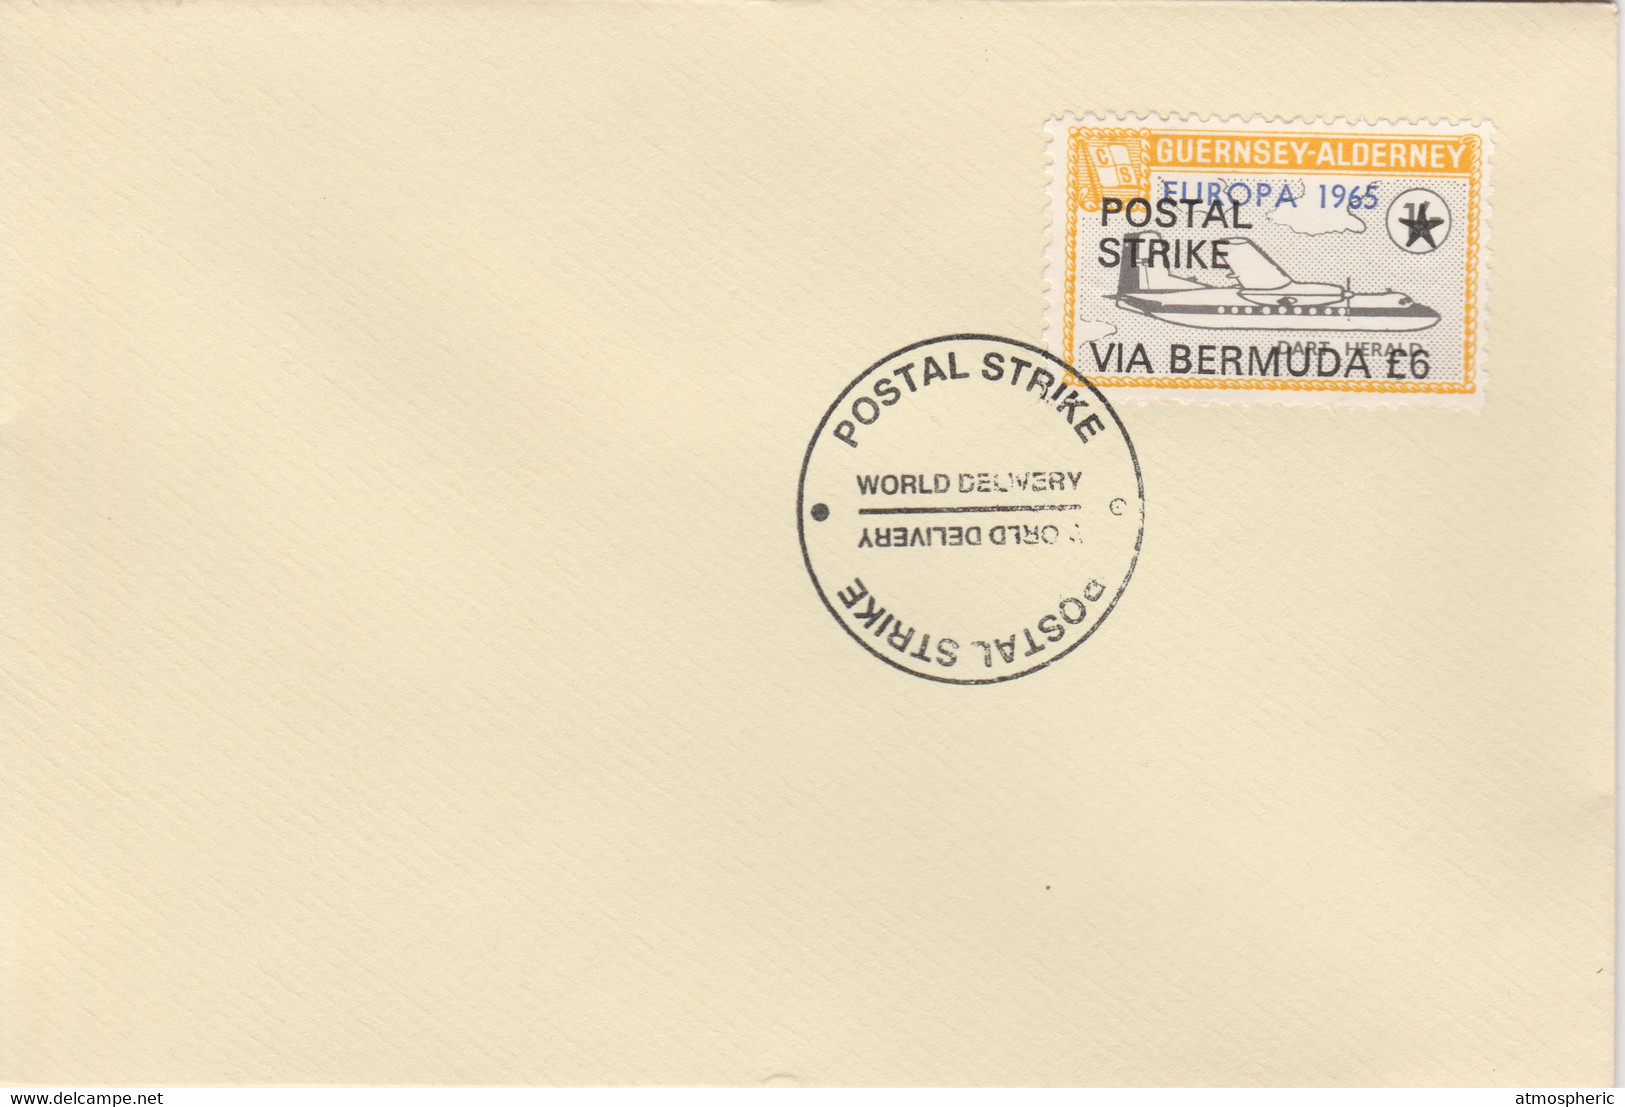 Guernsey - Alderney 1971 Postal Strike Cover To Bermuda Bearing Dart Herald 1s Overprinted Europa 1965 - Unclassified